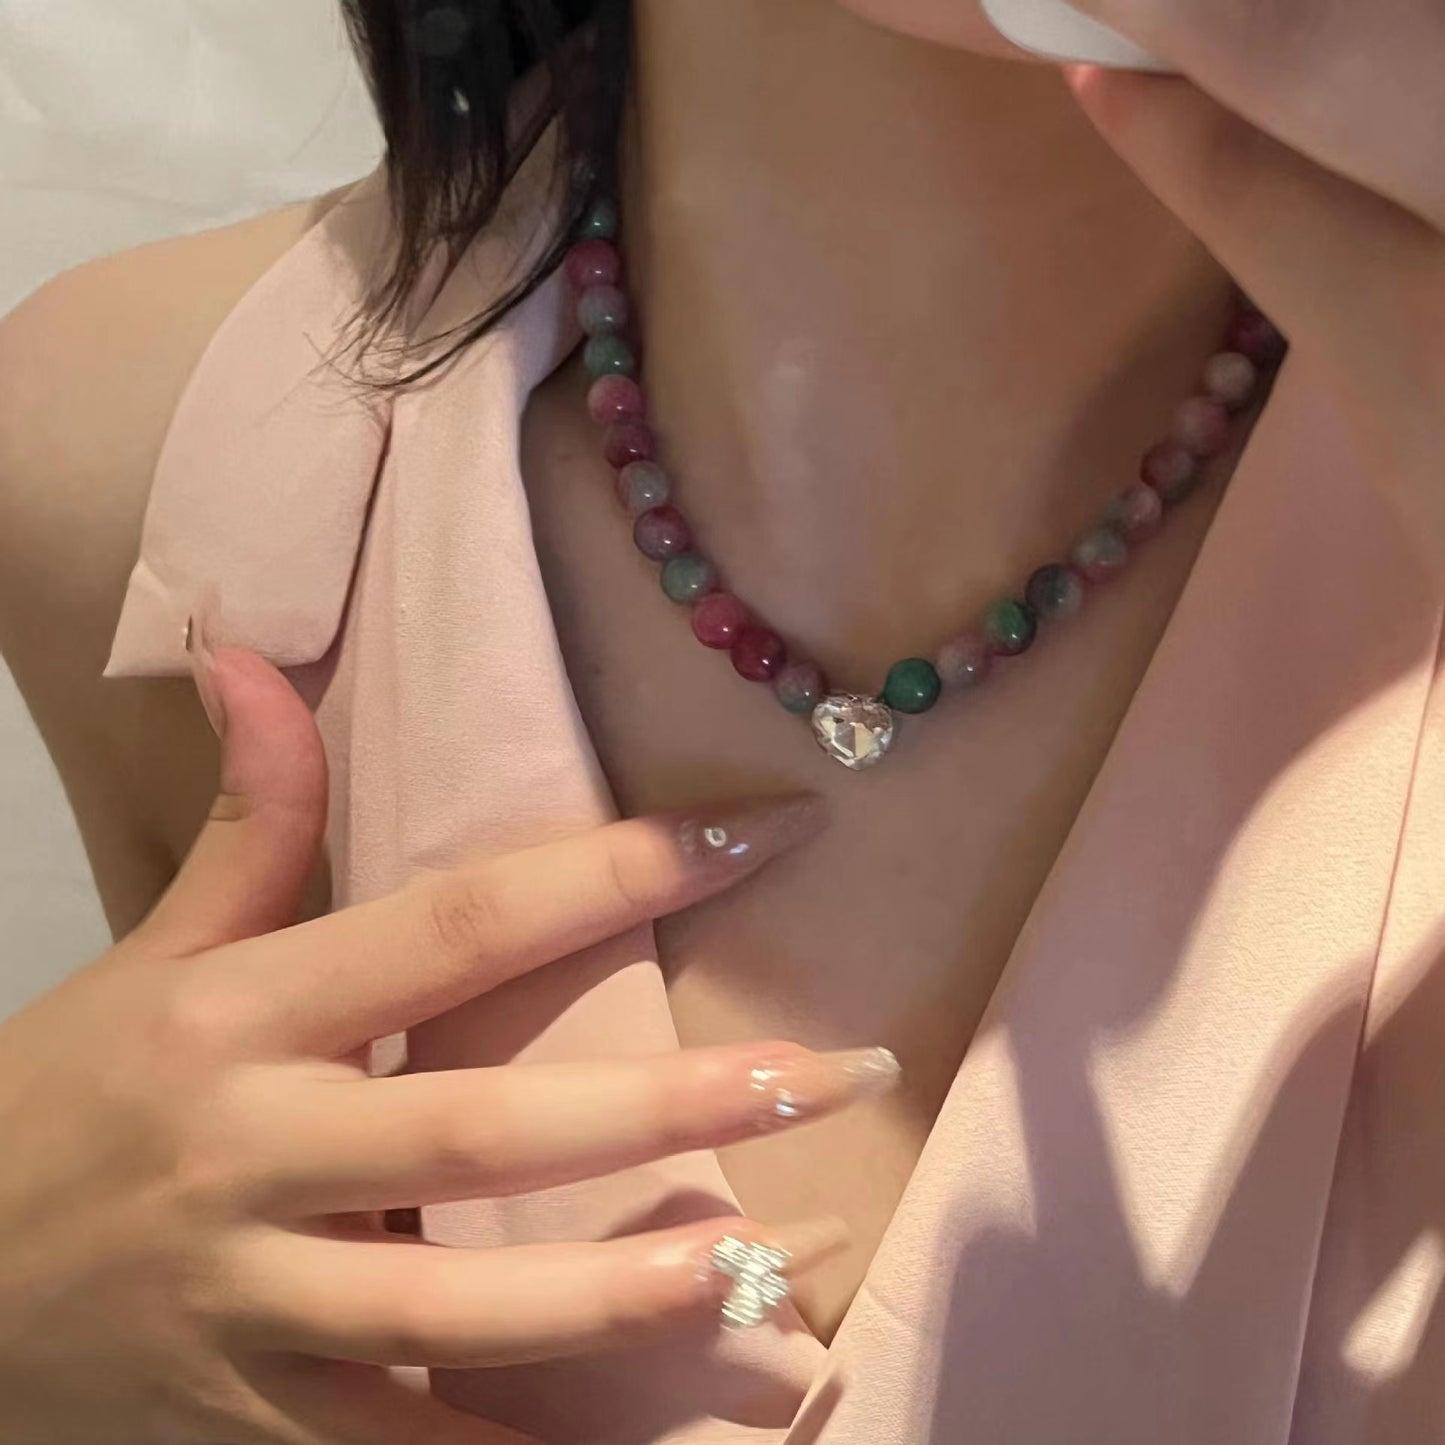 Original design: new Chinese run away pink love zircon spice pendant design: fashionable collarbone Necklace